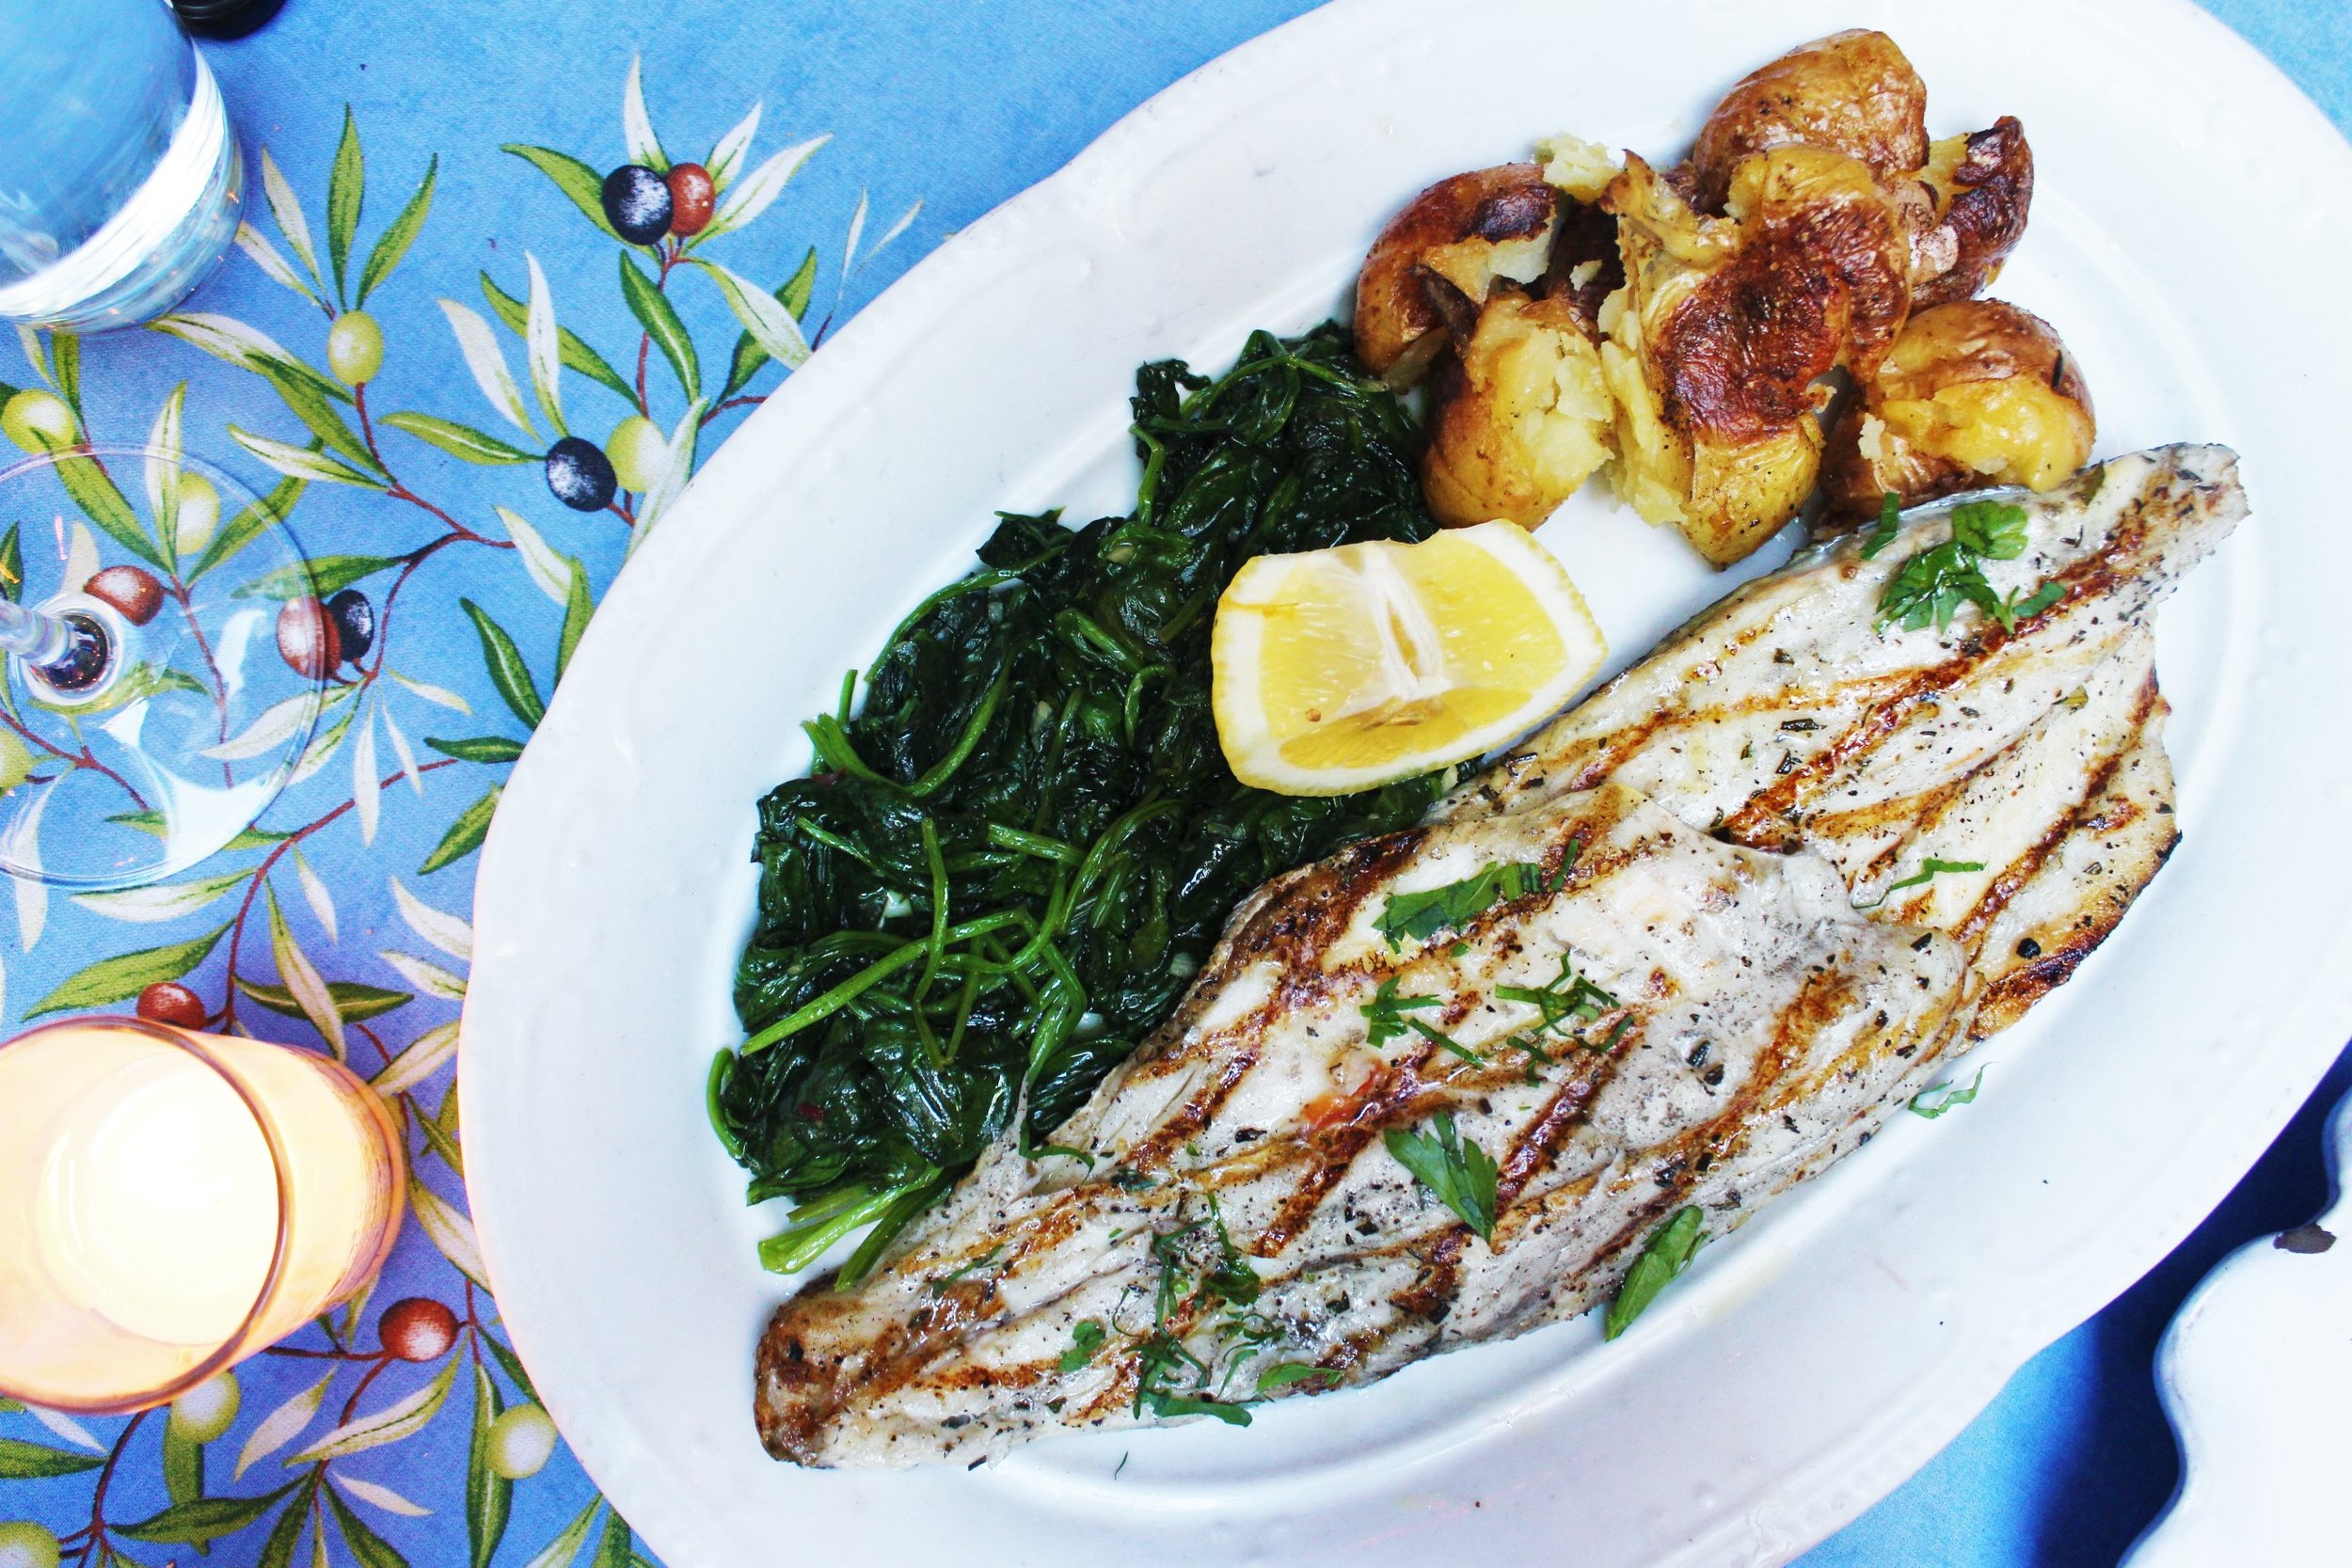 Branzino Alla Griglia Grilled Italian Sea Bass With Sautéed Spinach And Herb-Pressed Potatoes